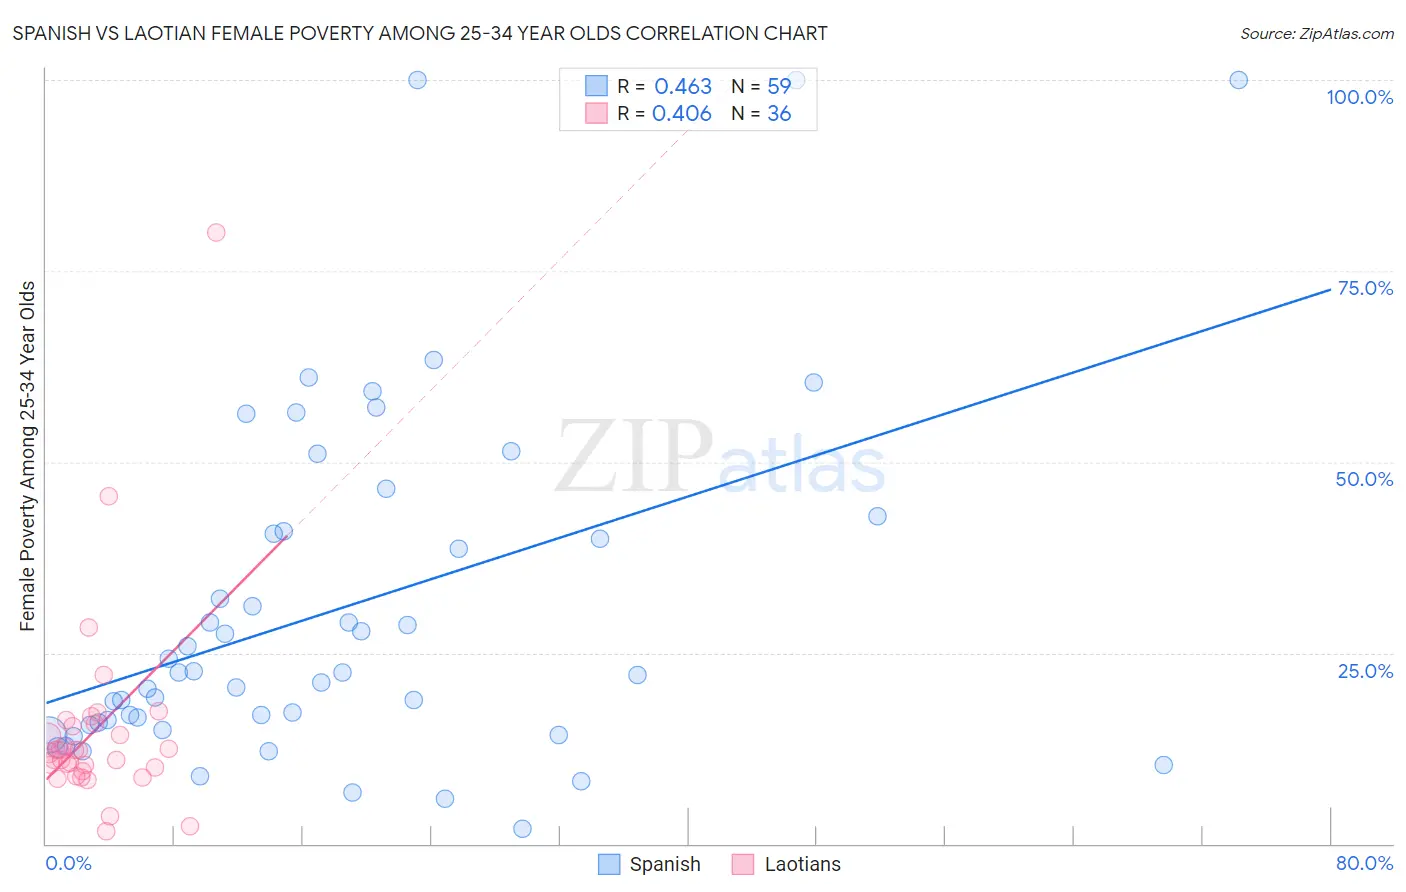 Spanish vs Laotian Female Poverty Among 25-34 Year Olds